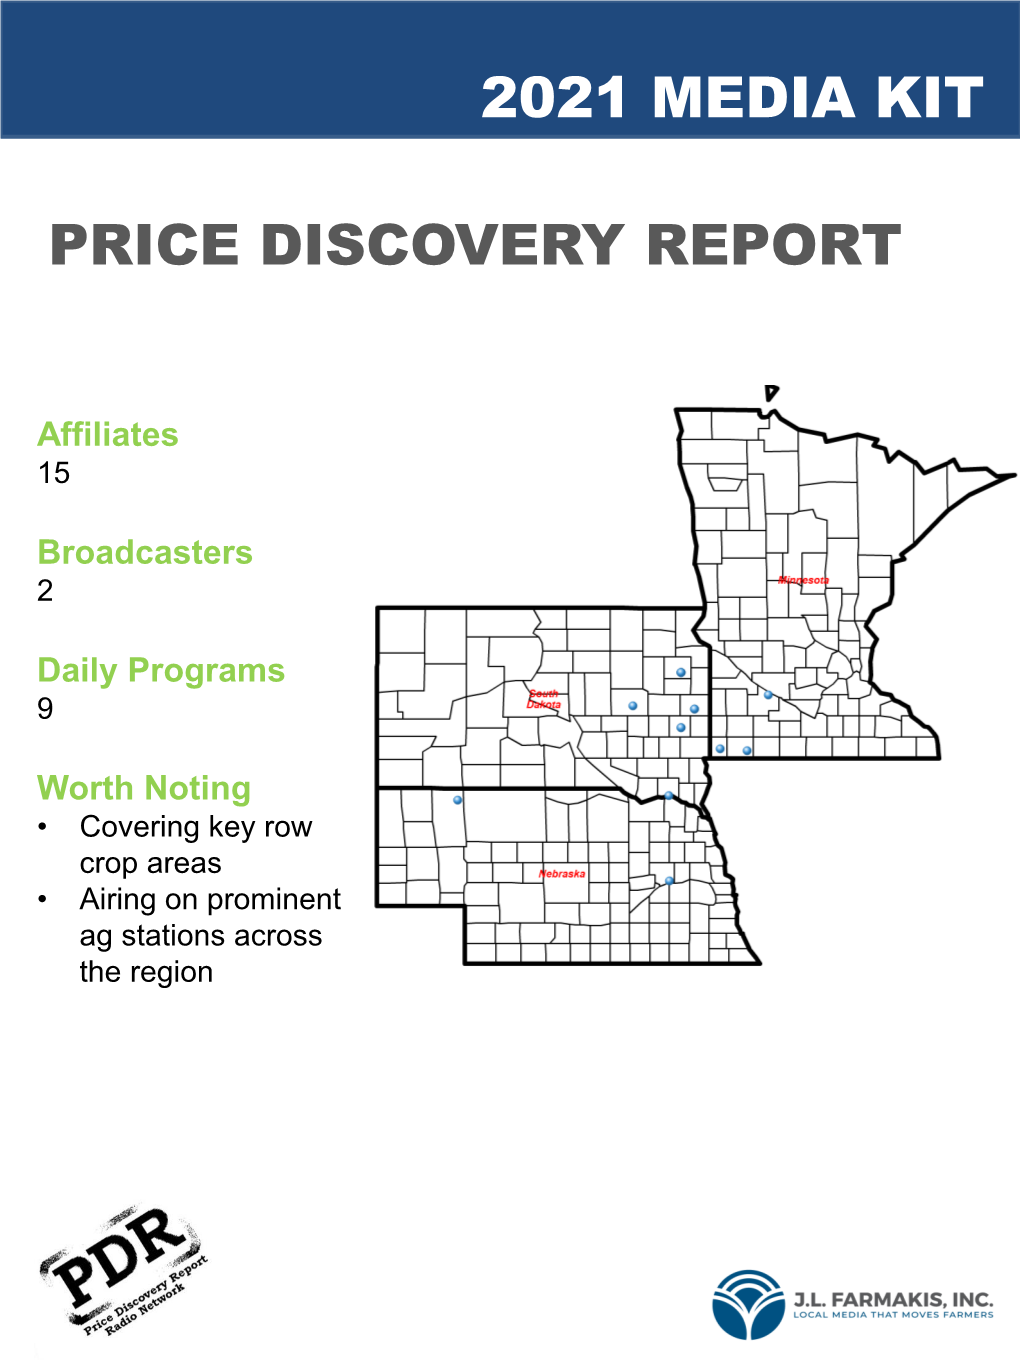 2021 Media Kit Price Discovery Report